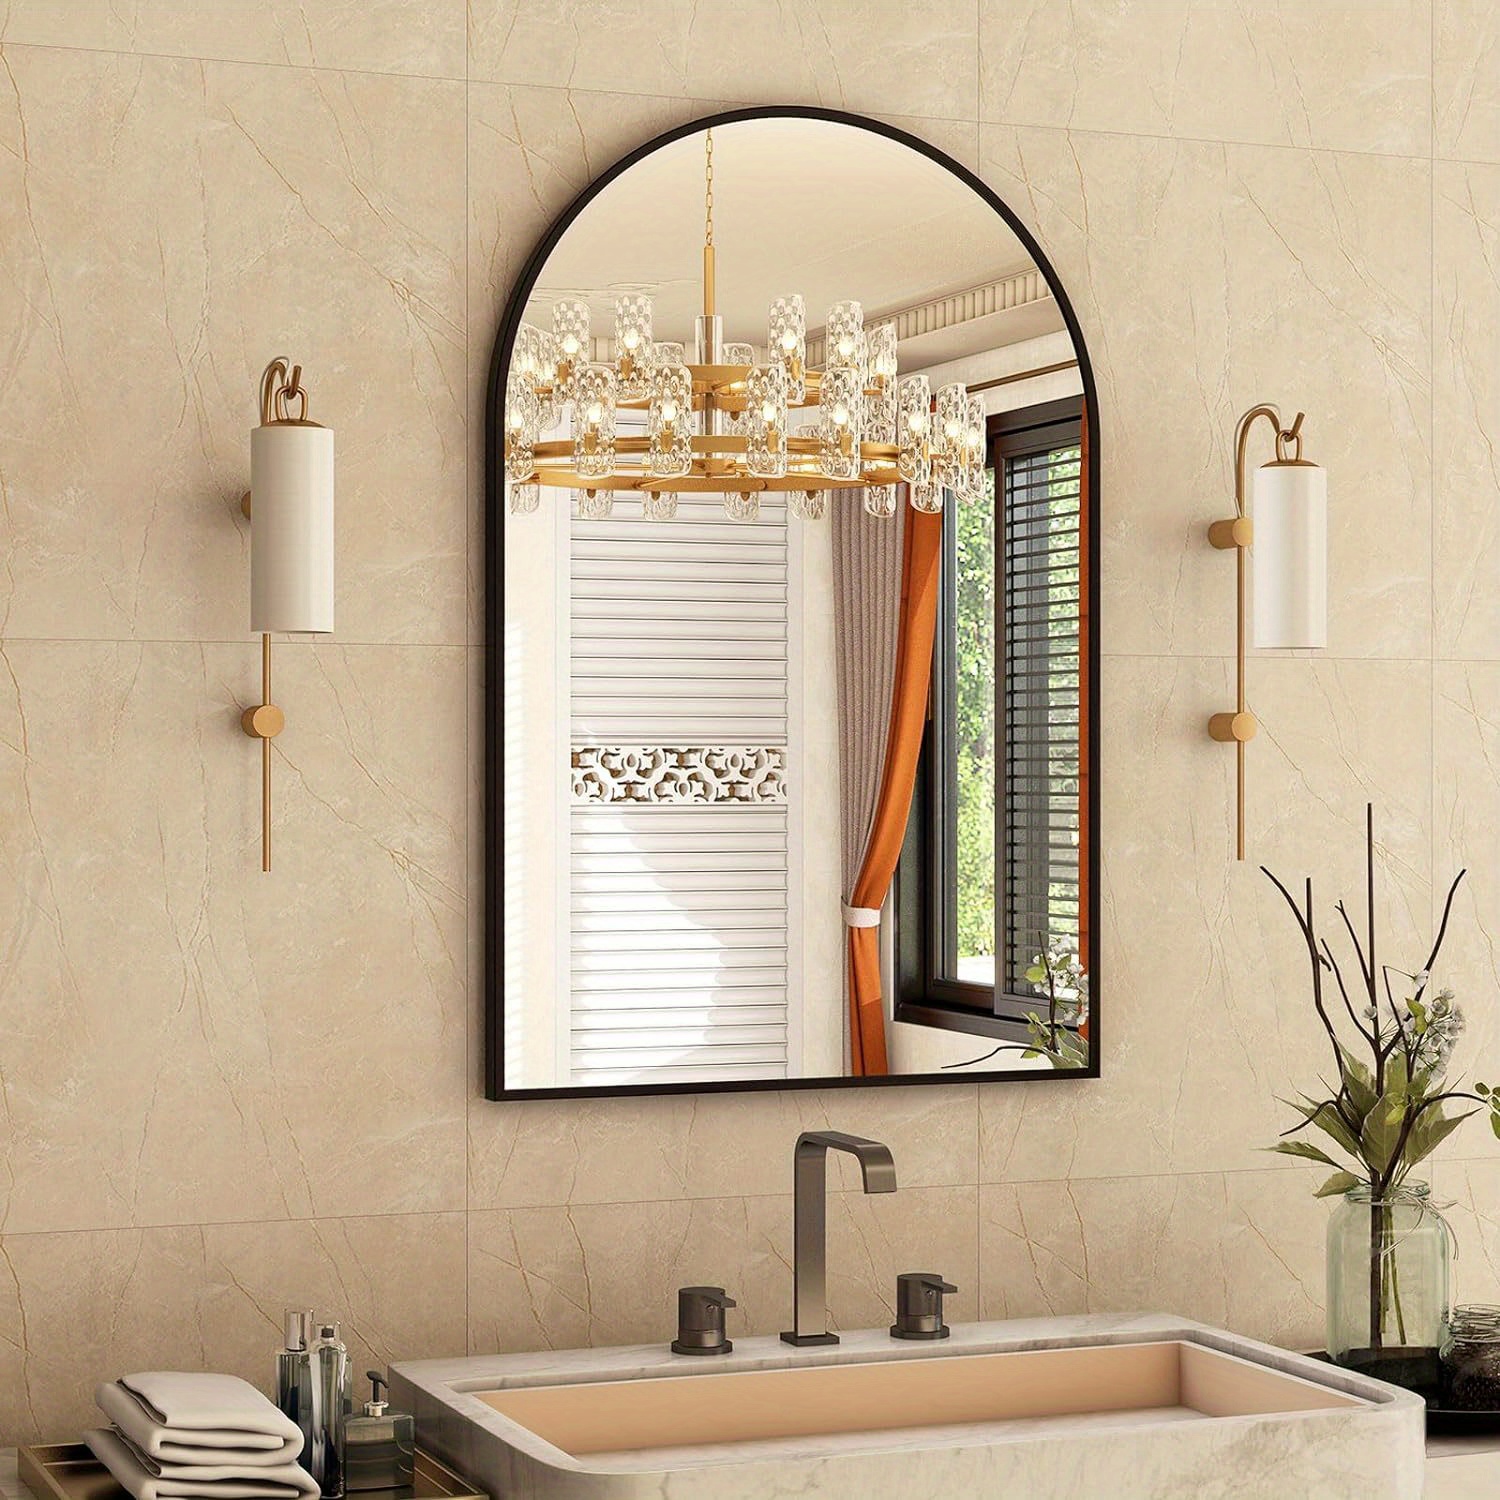 

16" X 24" Arched Bathroom Mirror - Wall Mirror For Bathroom, Metal Frame Vanity Mirror, Dresser Mirror, Arch Decorative Mirrors For Living Room, Bedroom, Entryway